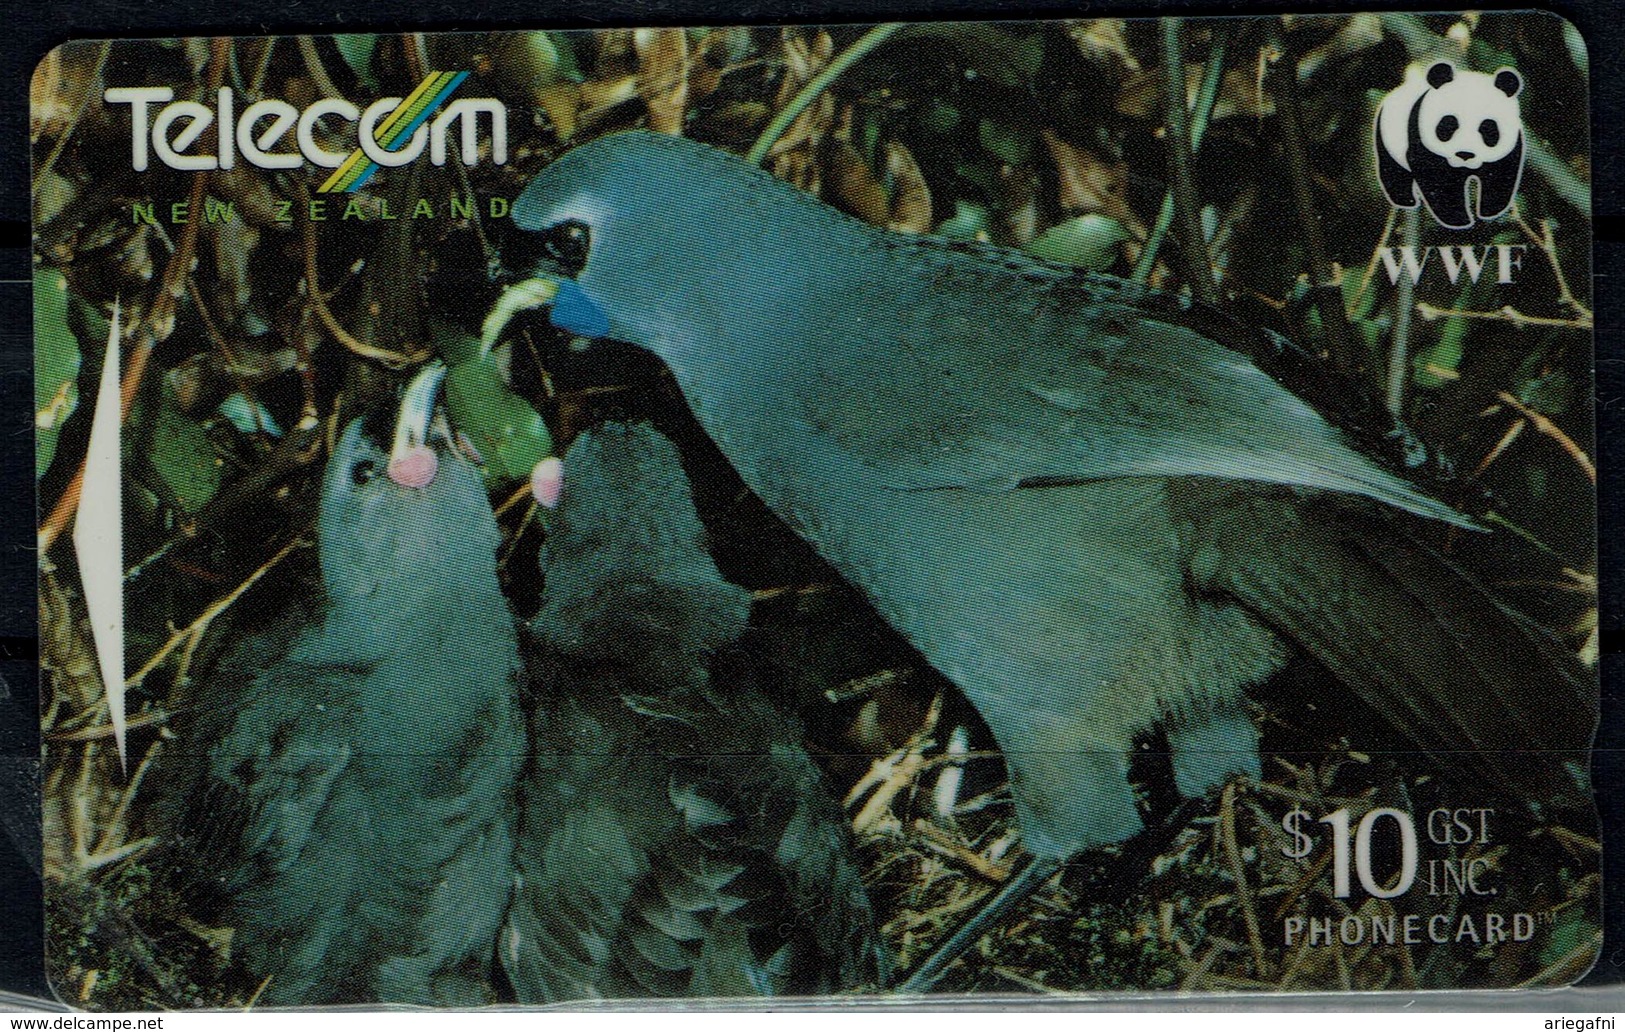 NEW ZEALAND 1998 PHONECARD WWF EAGLES USED VF!! - Eagles & Birds Of Prey